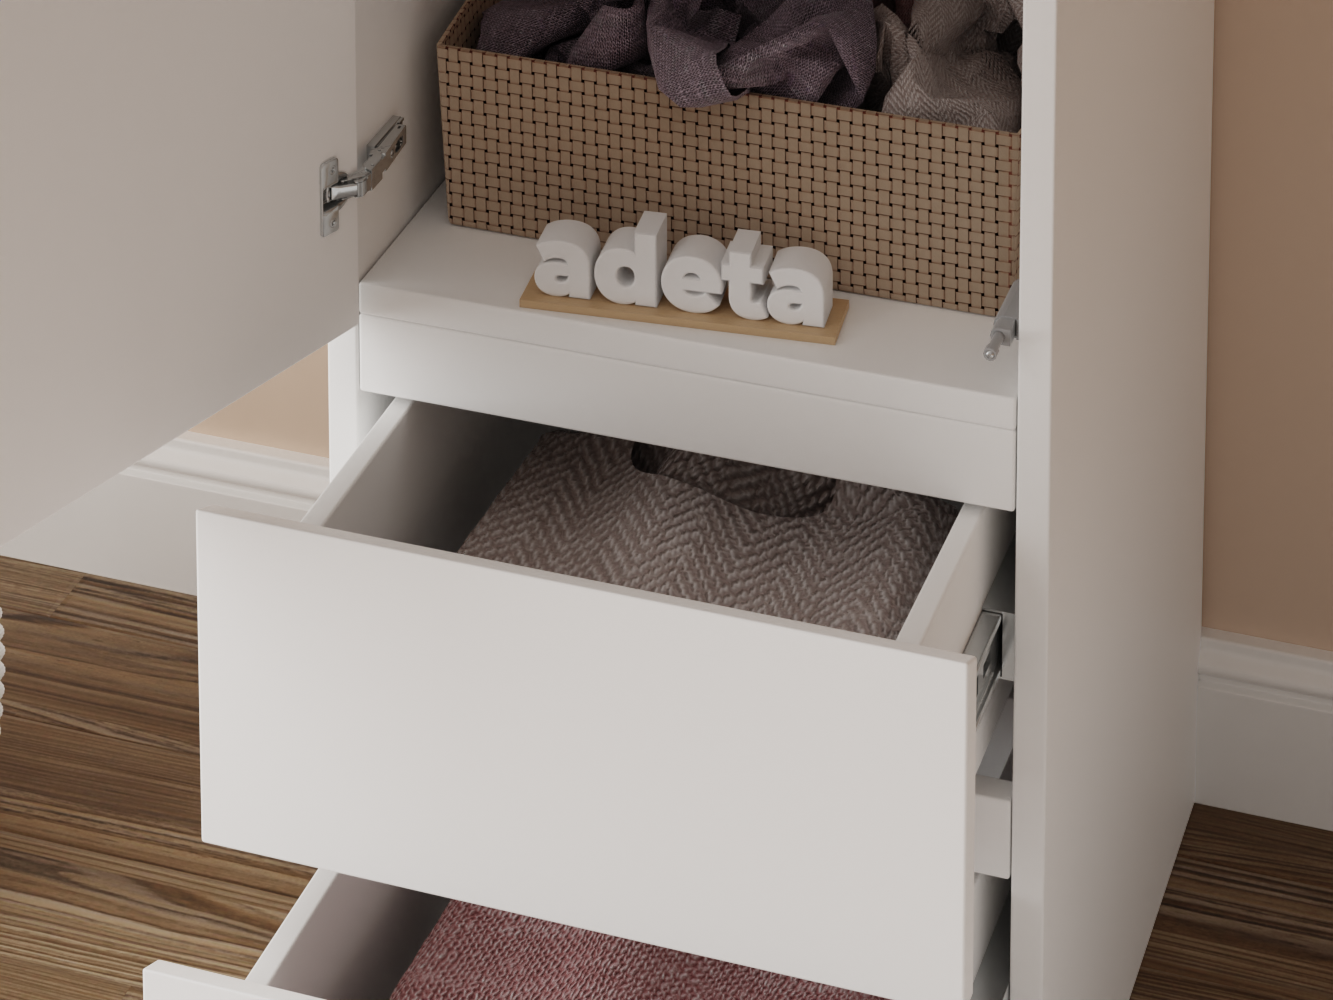 Распашной шкаф Мальм 316 white ИКЕА (IKEA) изображение товара